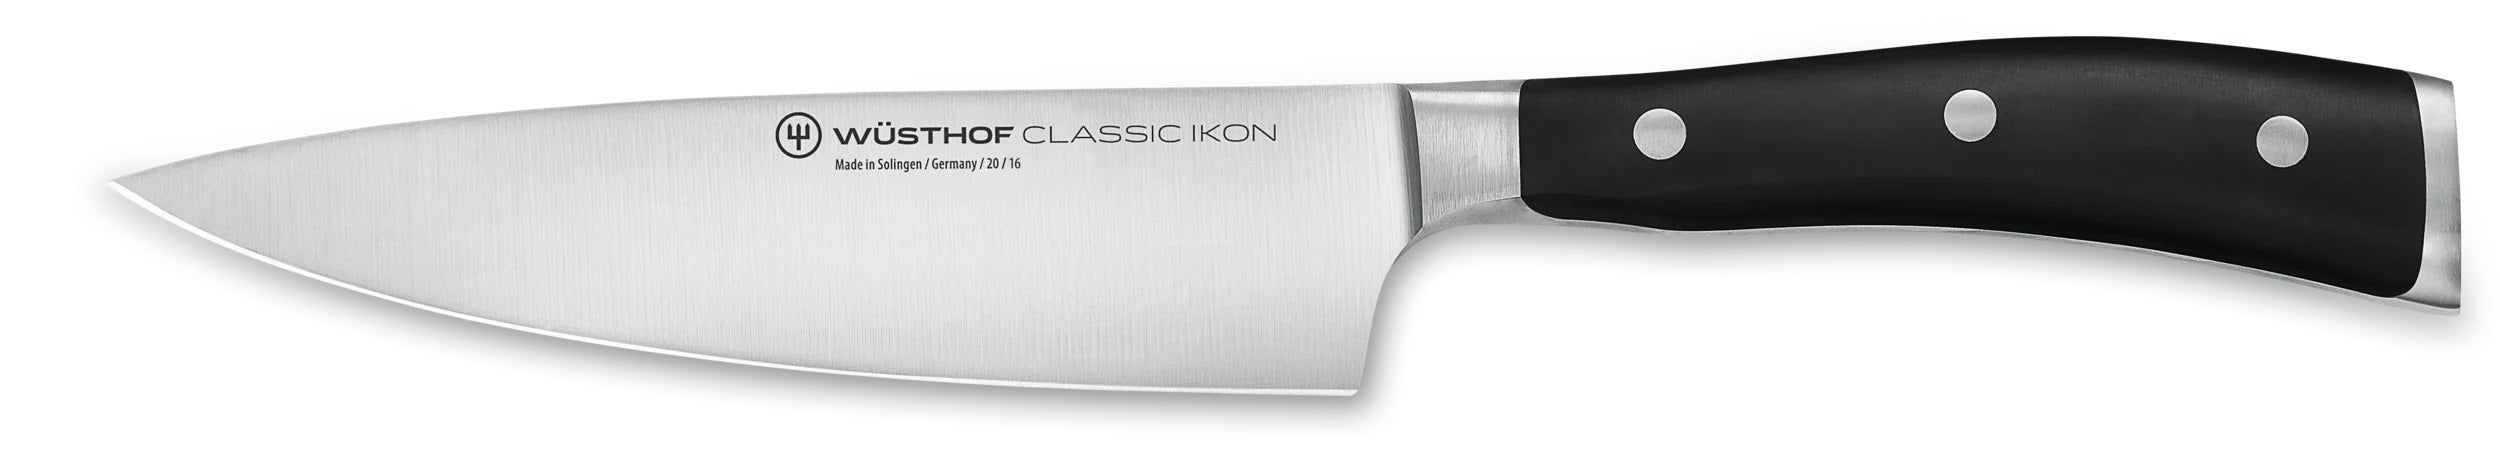 Wusthof Classic Ikon 6" Chef's Knife 1040330116